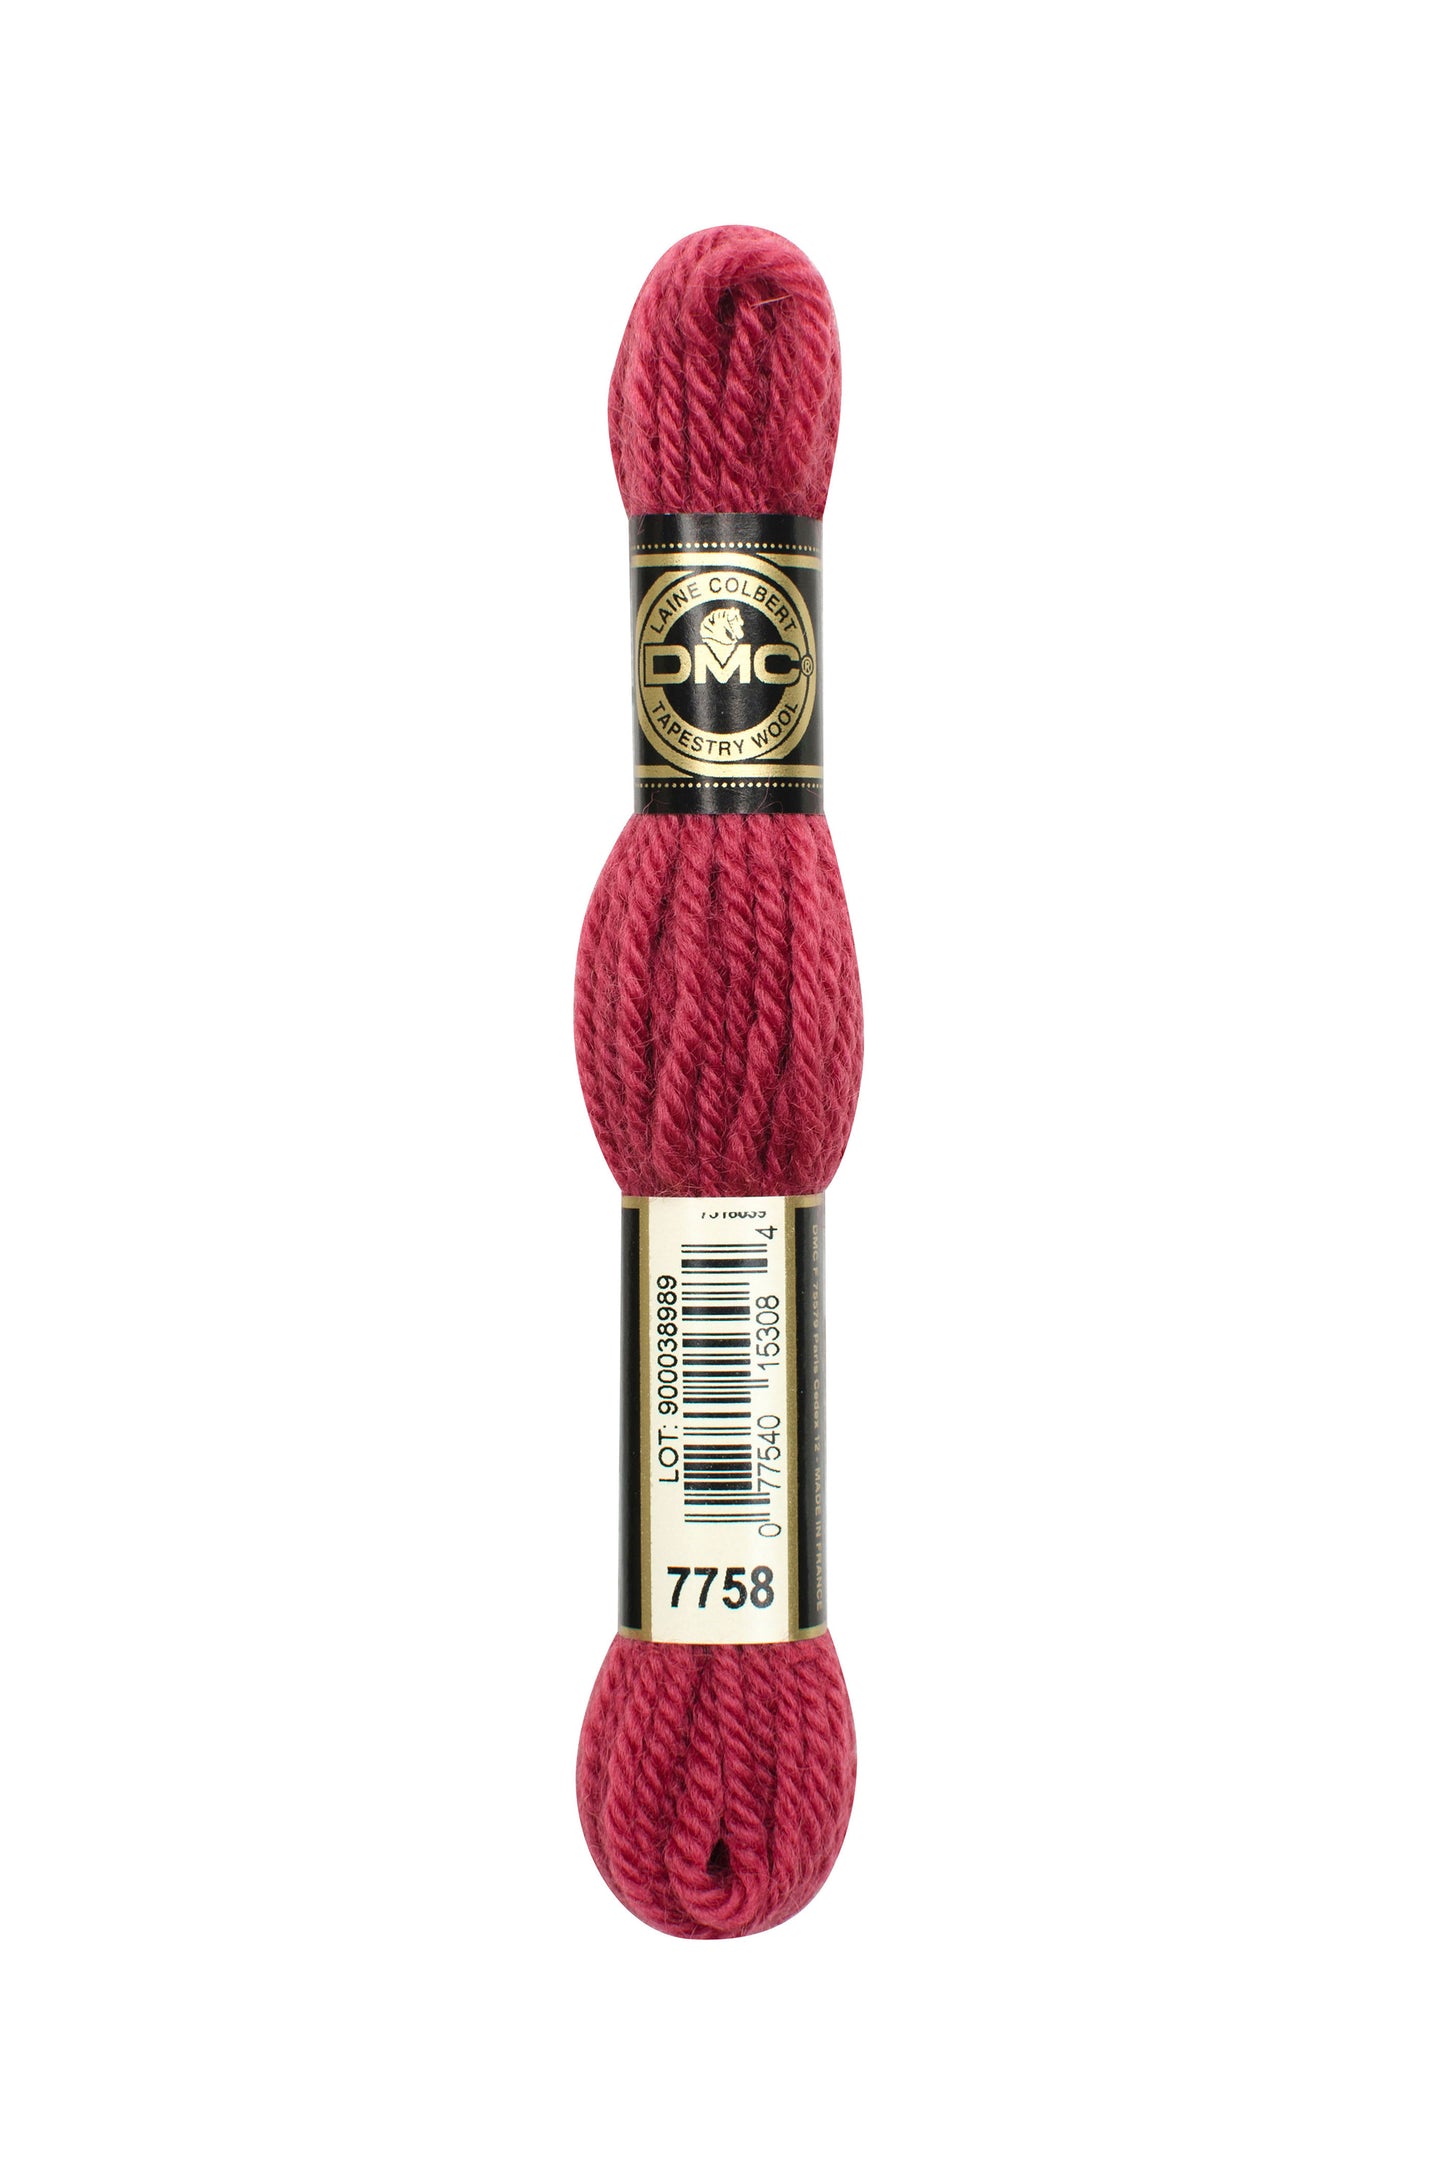 7758 – DMC Tapestry Wool